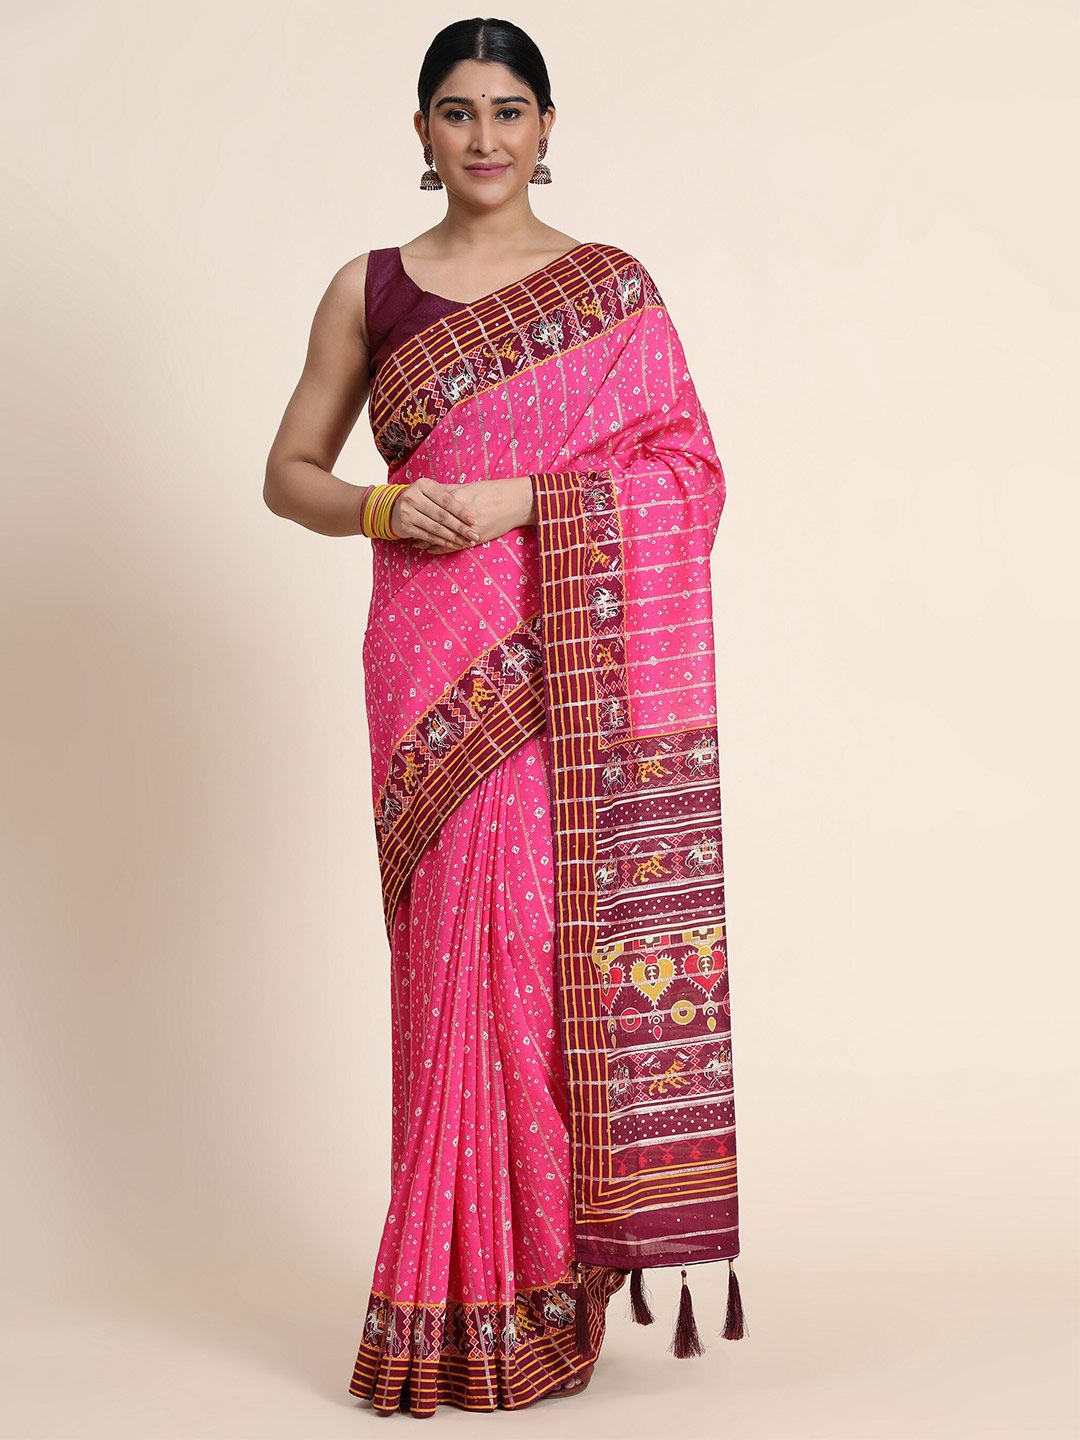 ASPORA Women Pink & White Warli Fusion Jamdani Saree Price in India